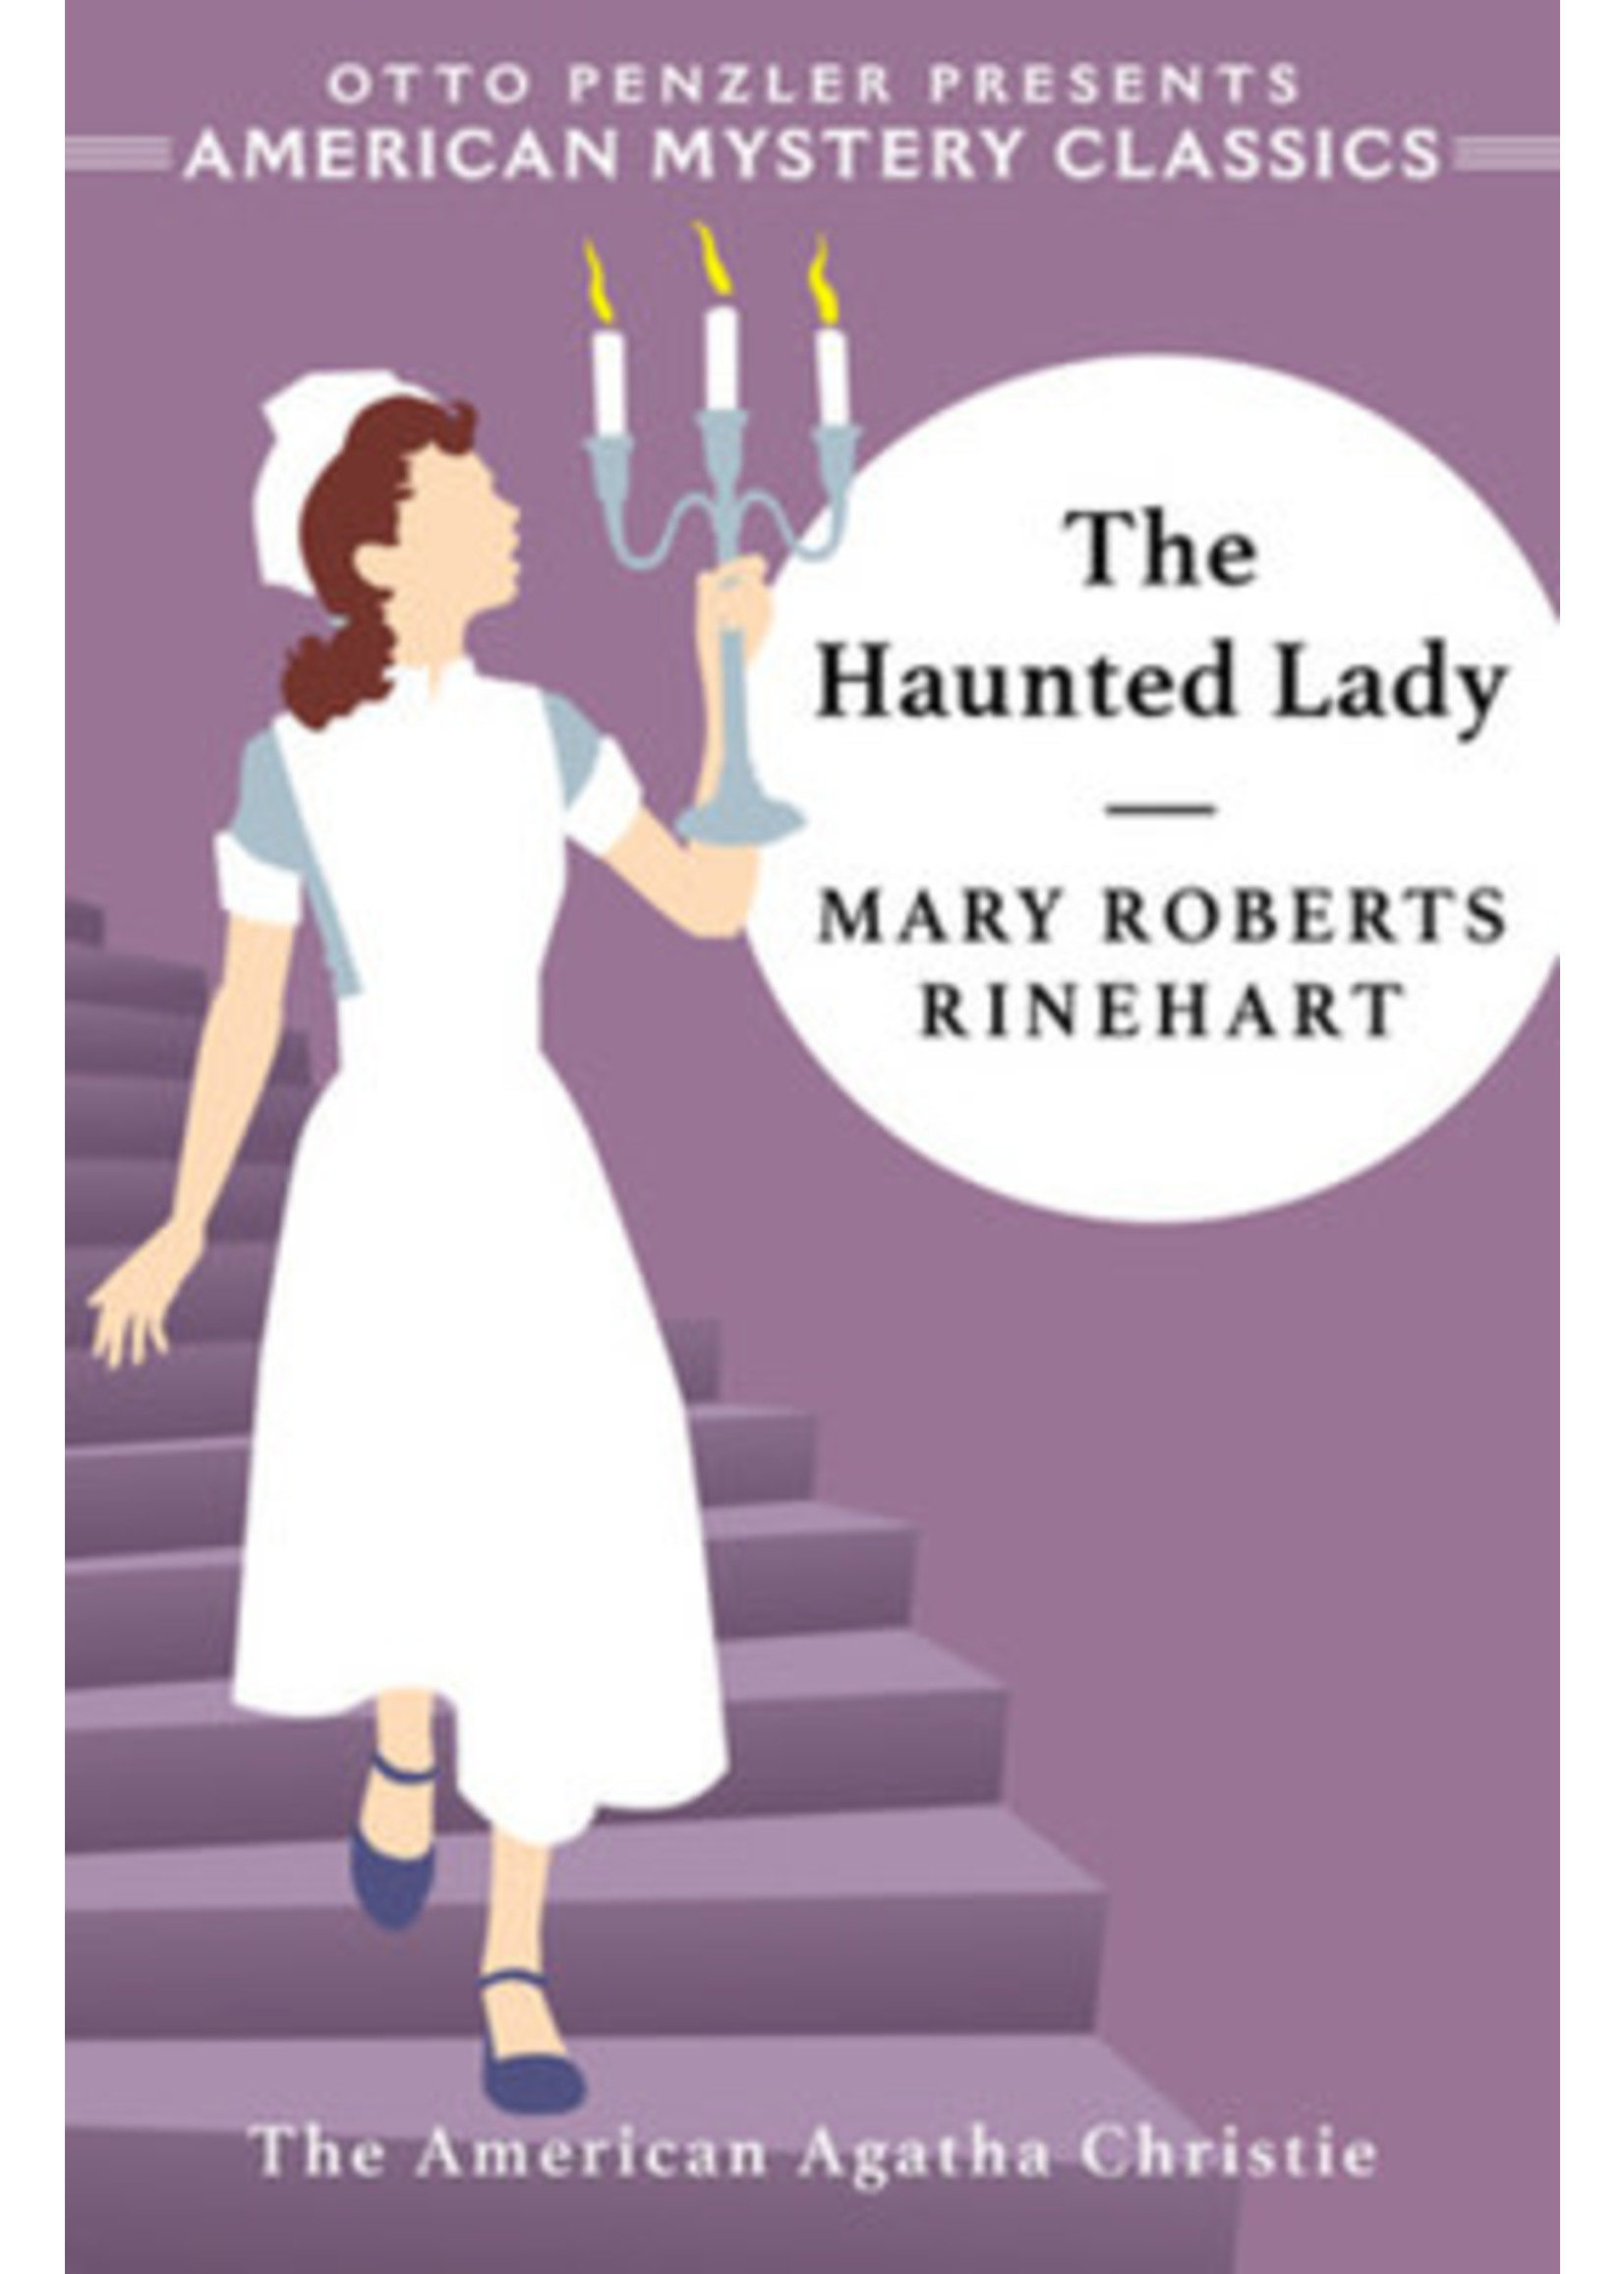 The Haunted Lady (Hilda Adams #4) by Mary Roberts Rinehart